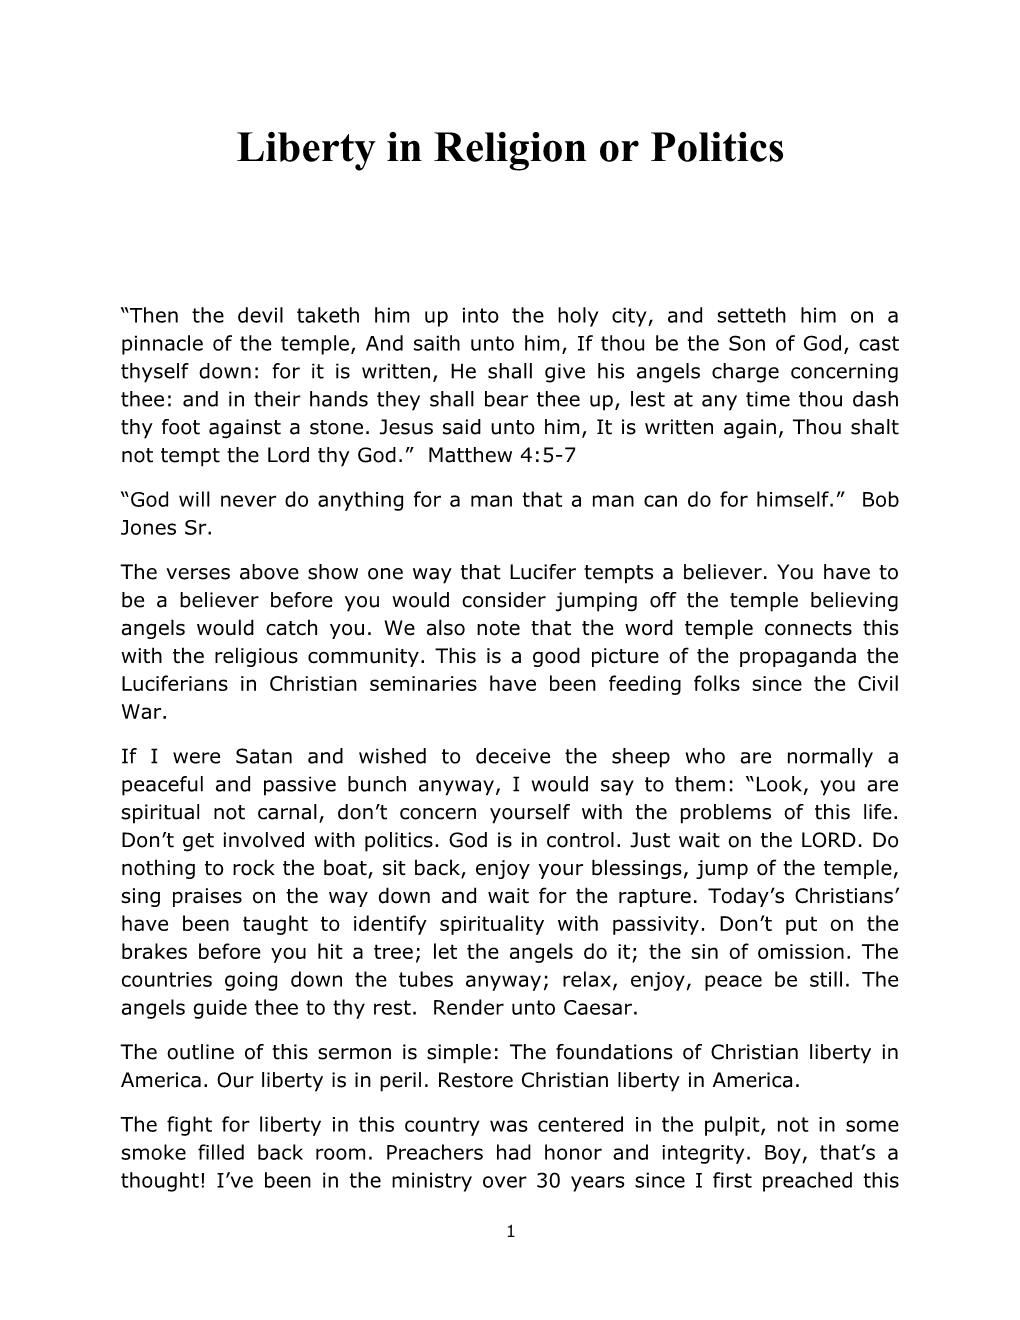 Liberty in Religion Or Politics